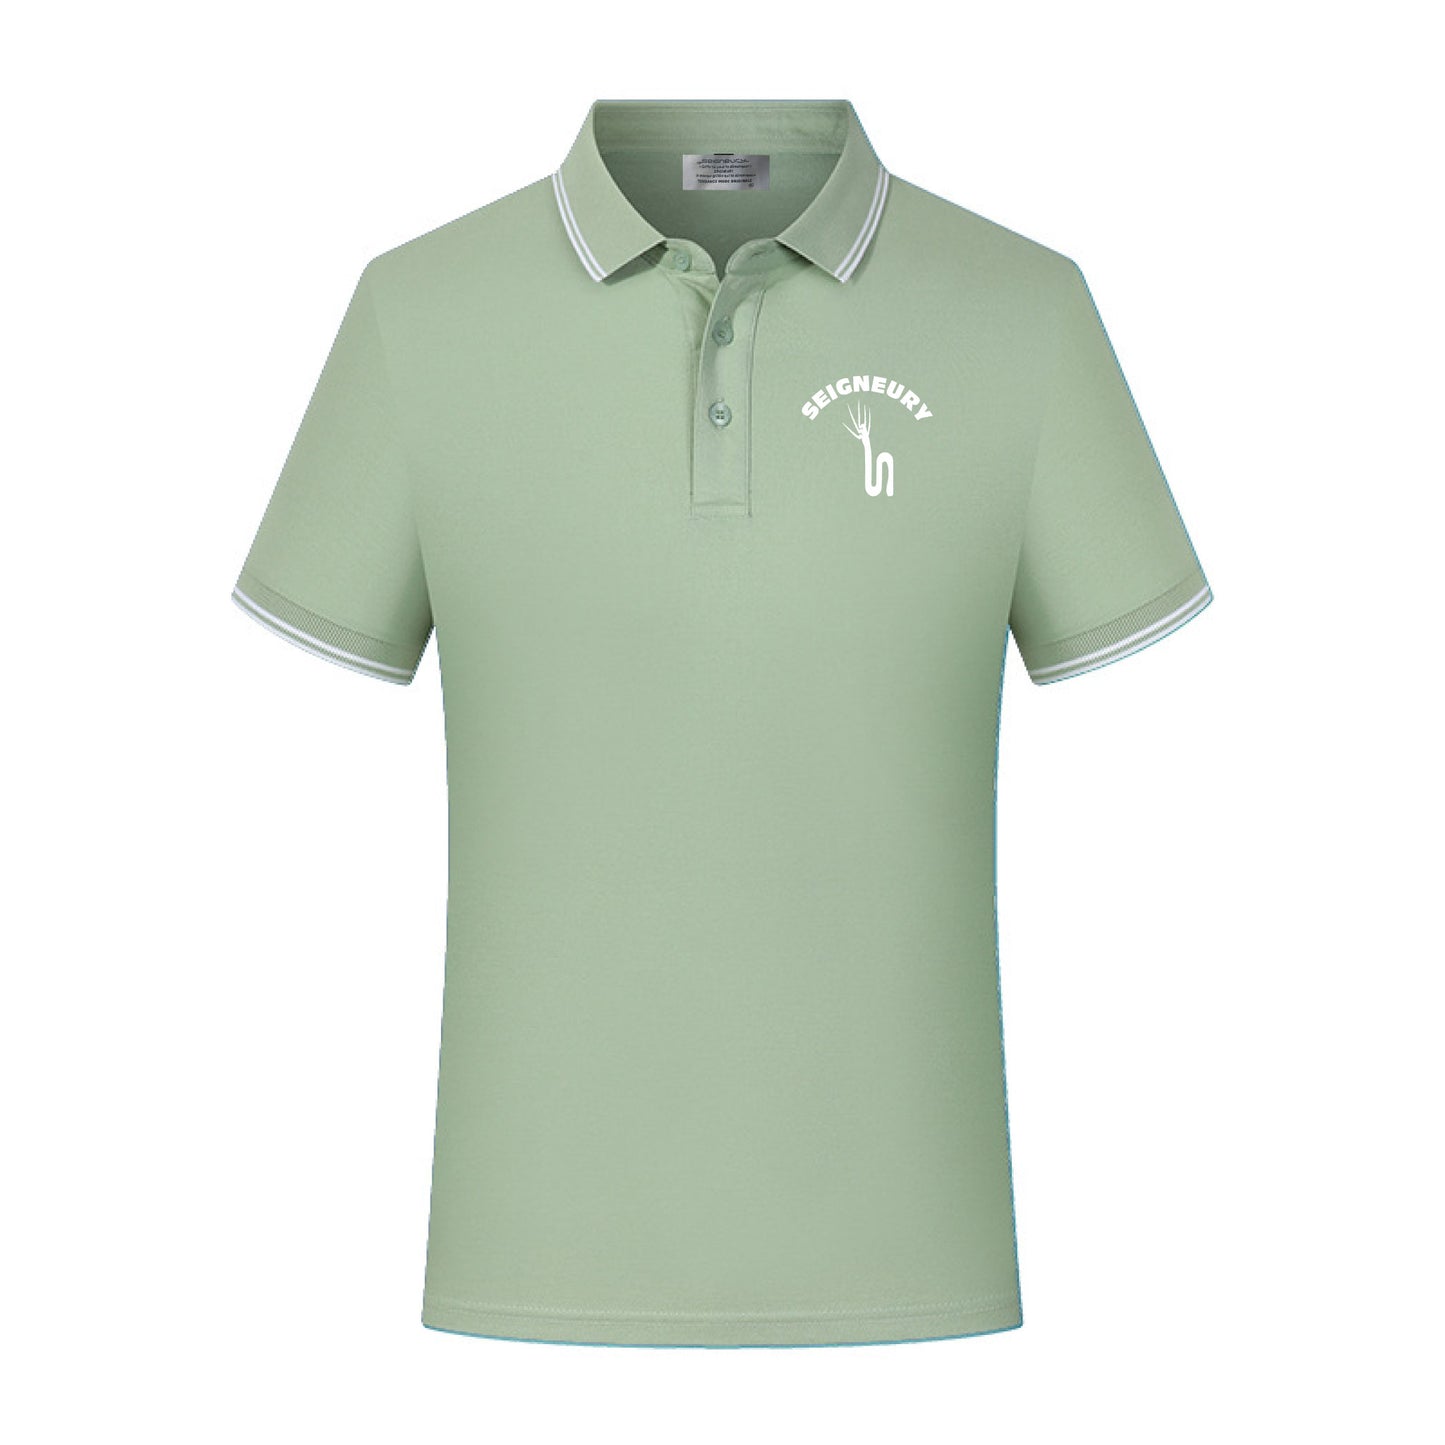 Polo Golf UNISEX Respirant Cotton Haute Qualité Logo Broder Gamme Or